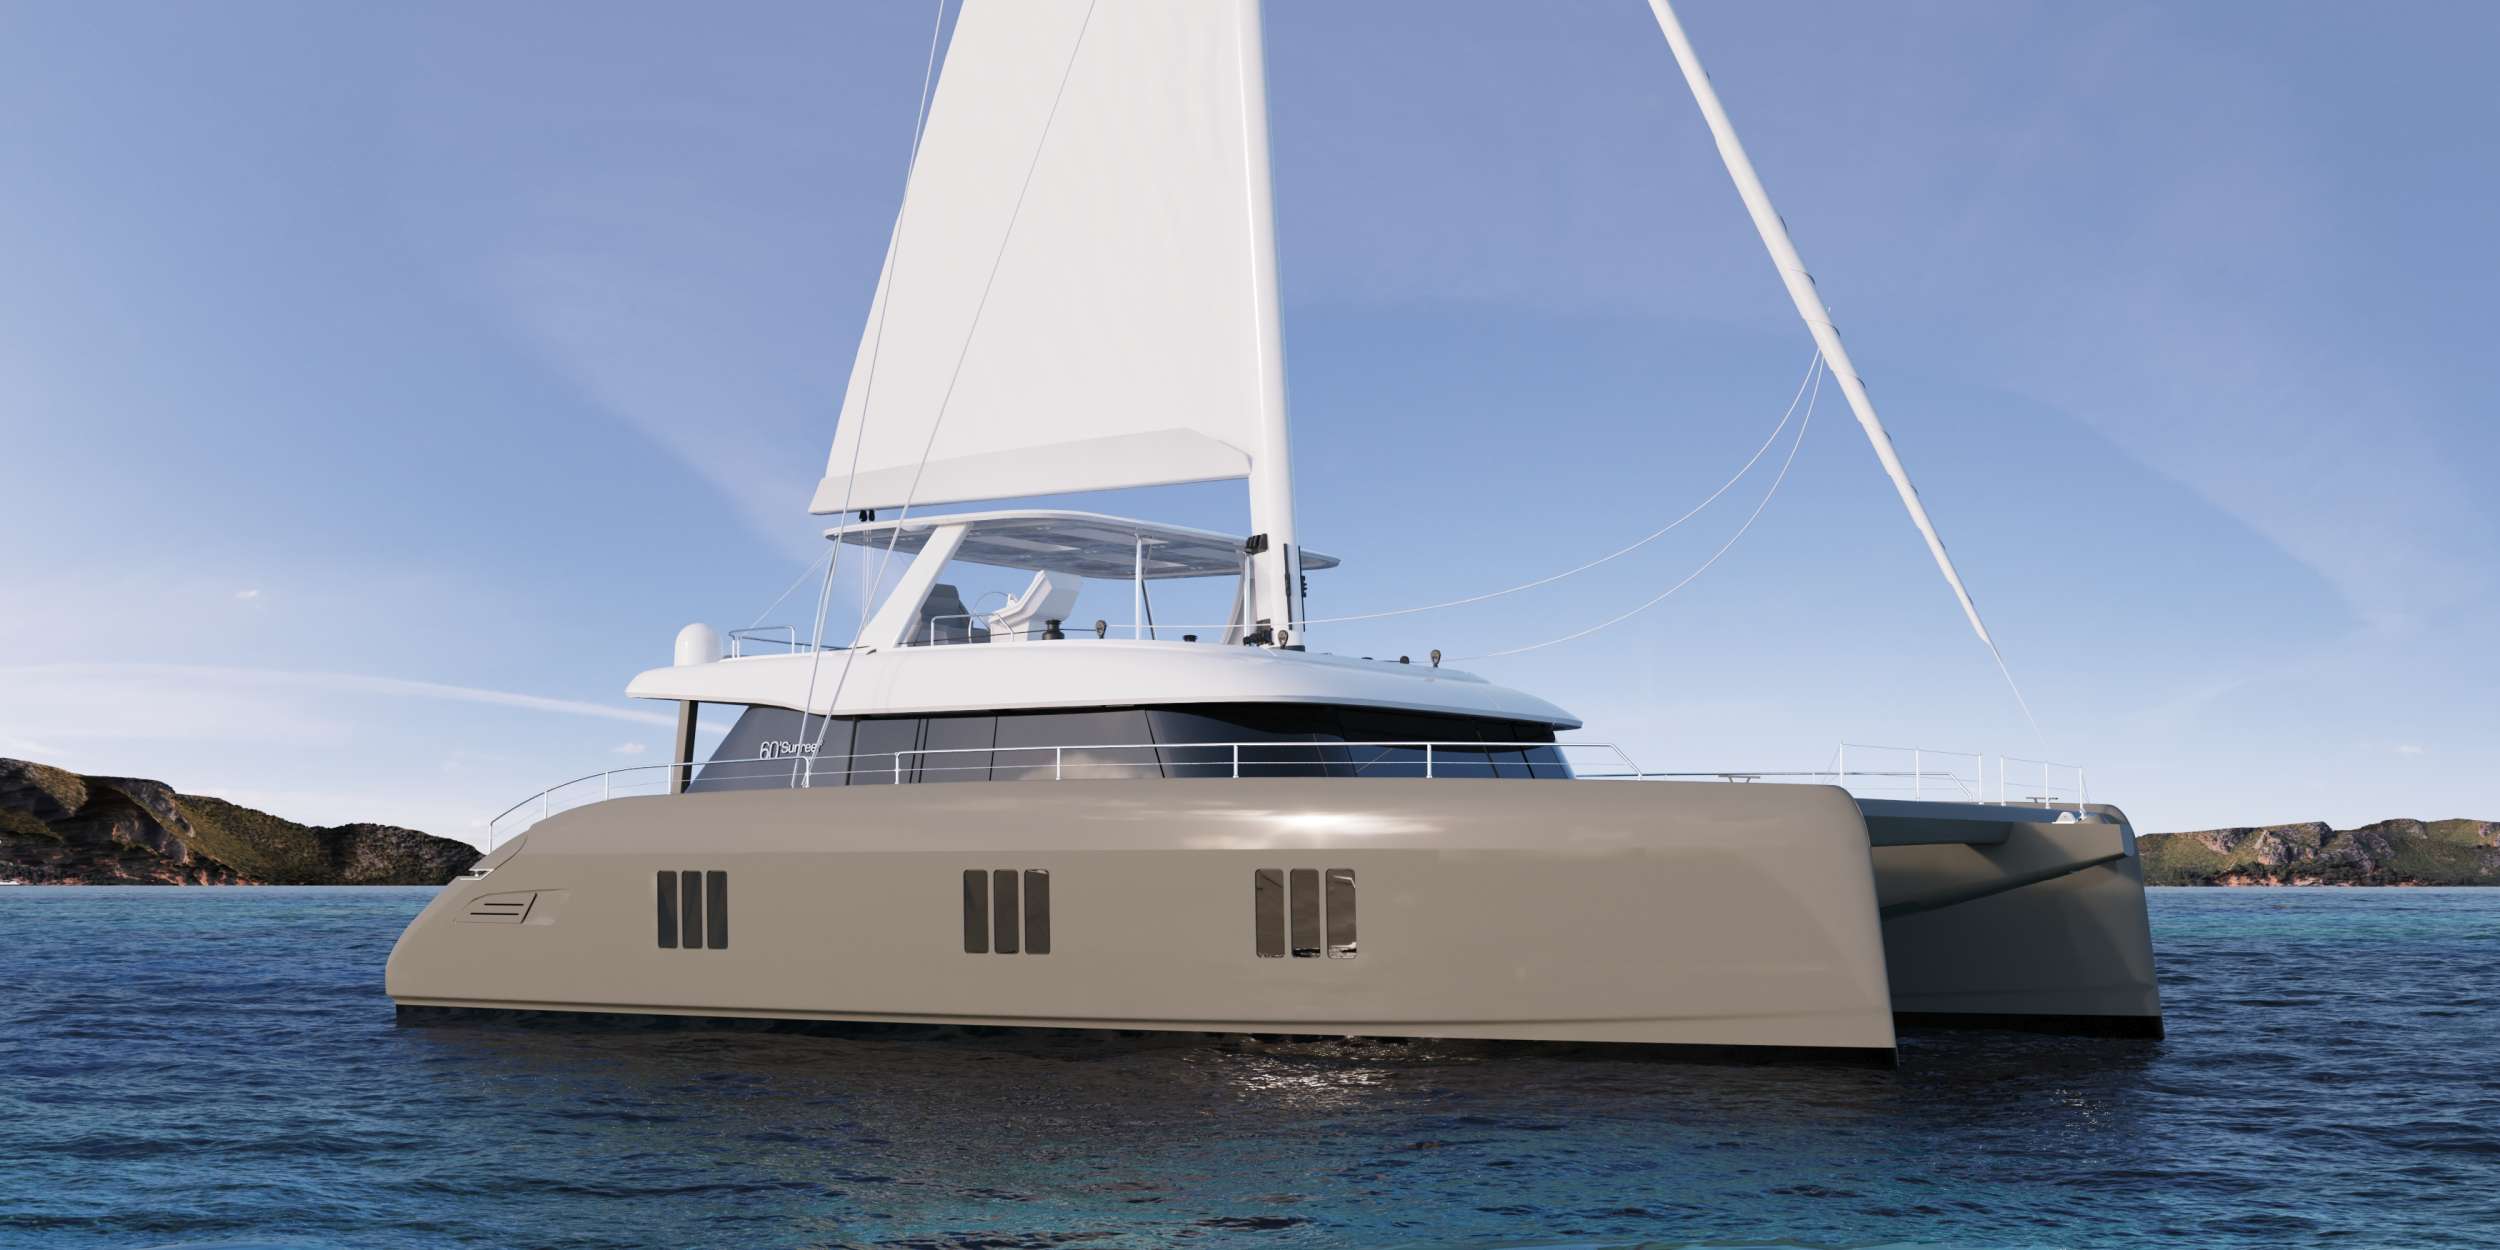 YLIME - Yacht Charter Beaulieu-sur-Mer & Boat hire in Fr. Riviera, Corsica & Sardinia 1